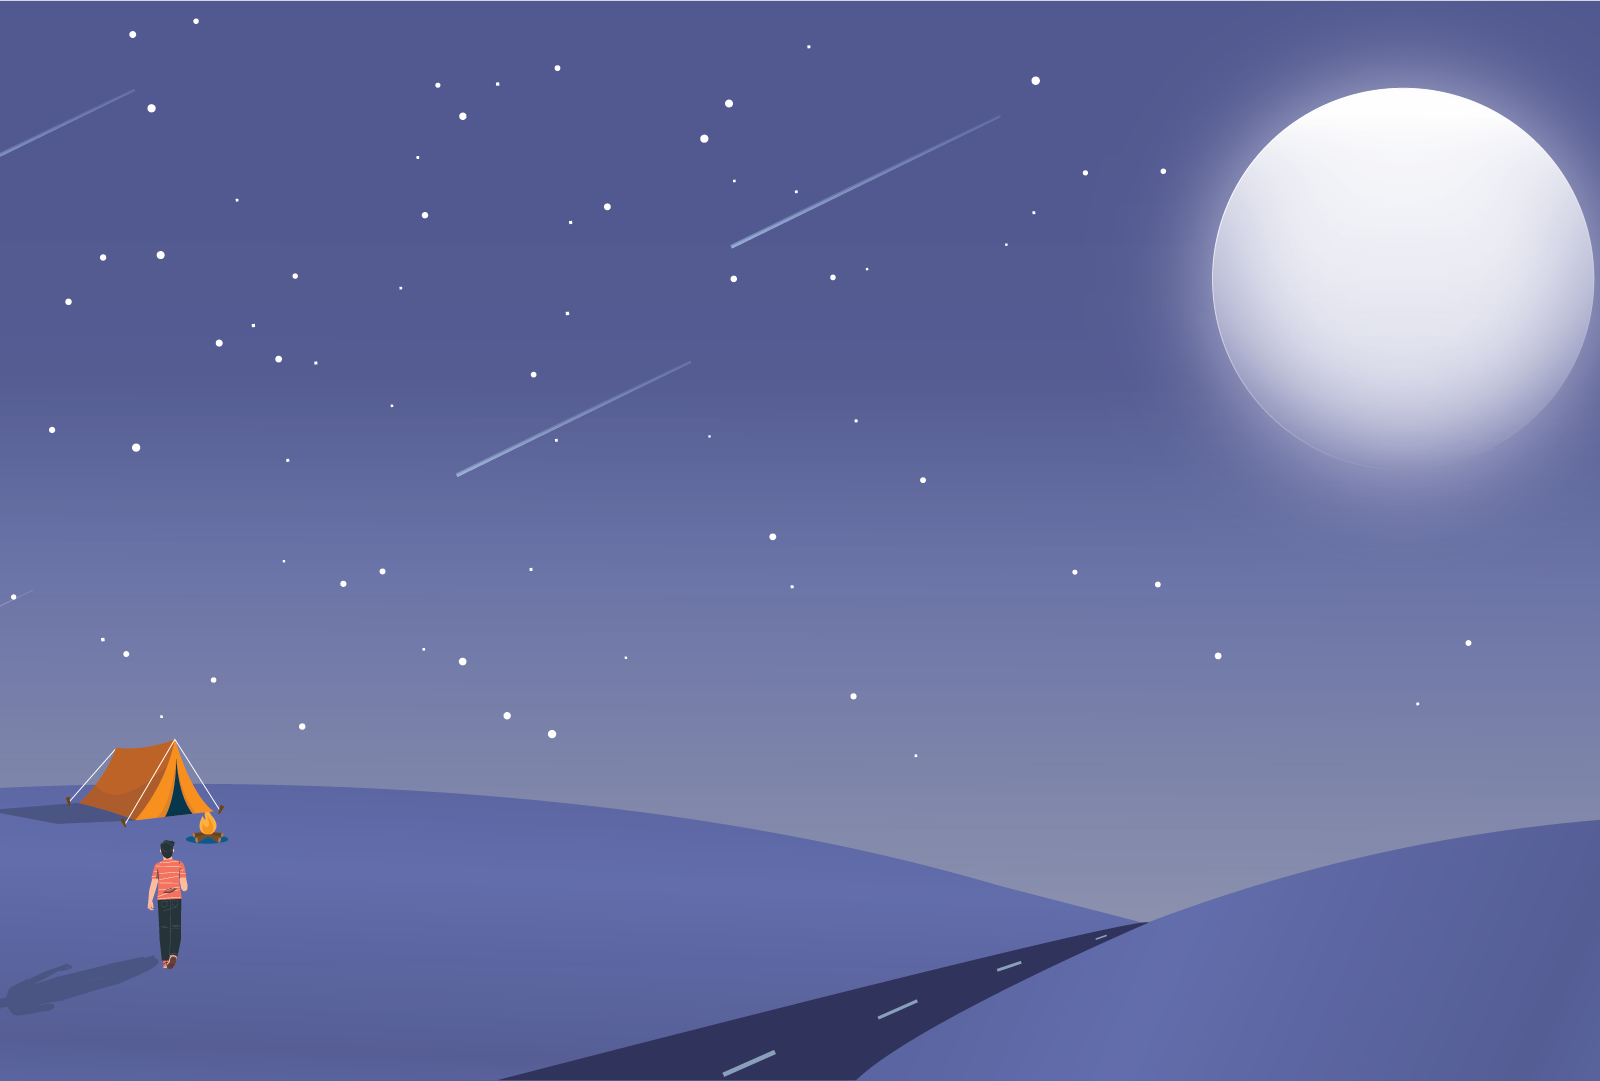 Night Sky illustration by Shahzaib on Dribbble